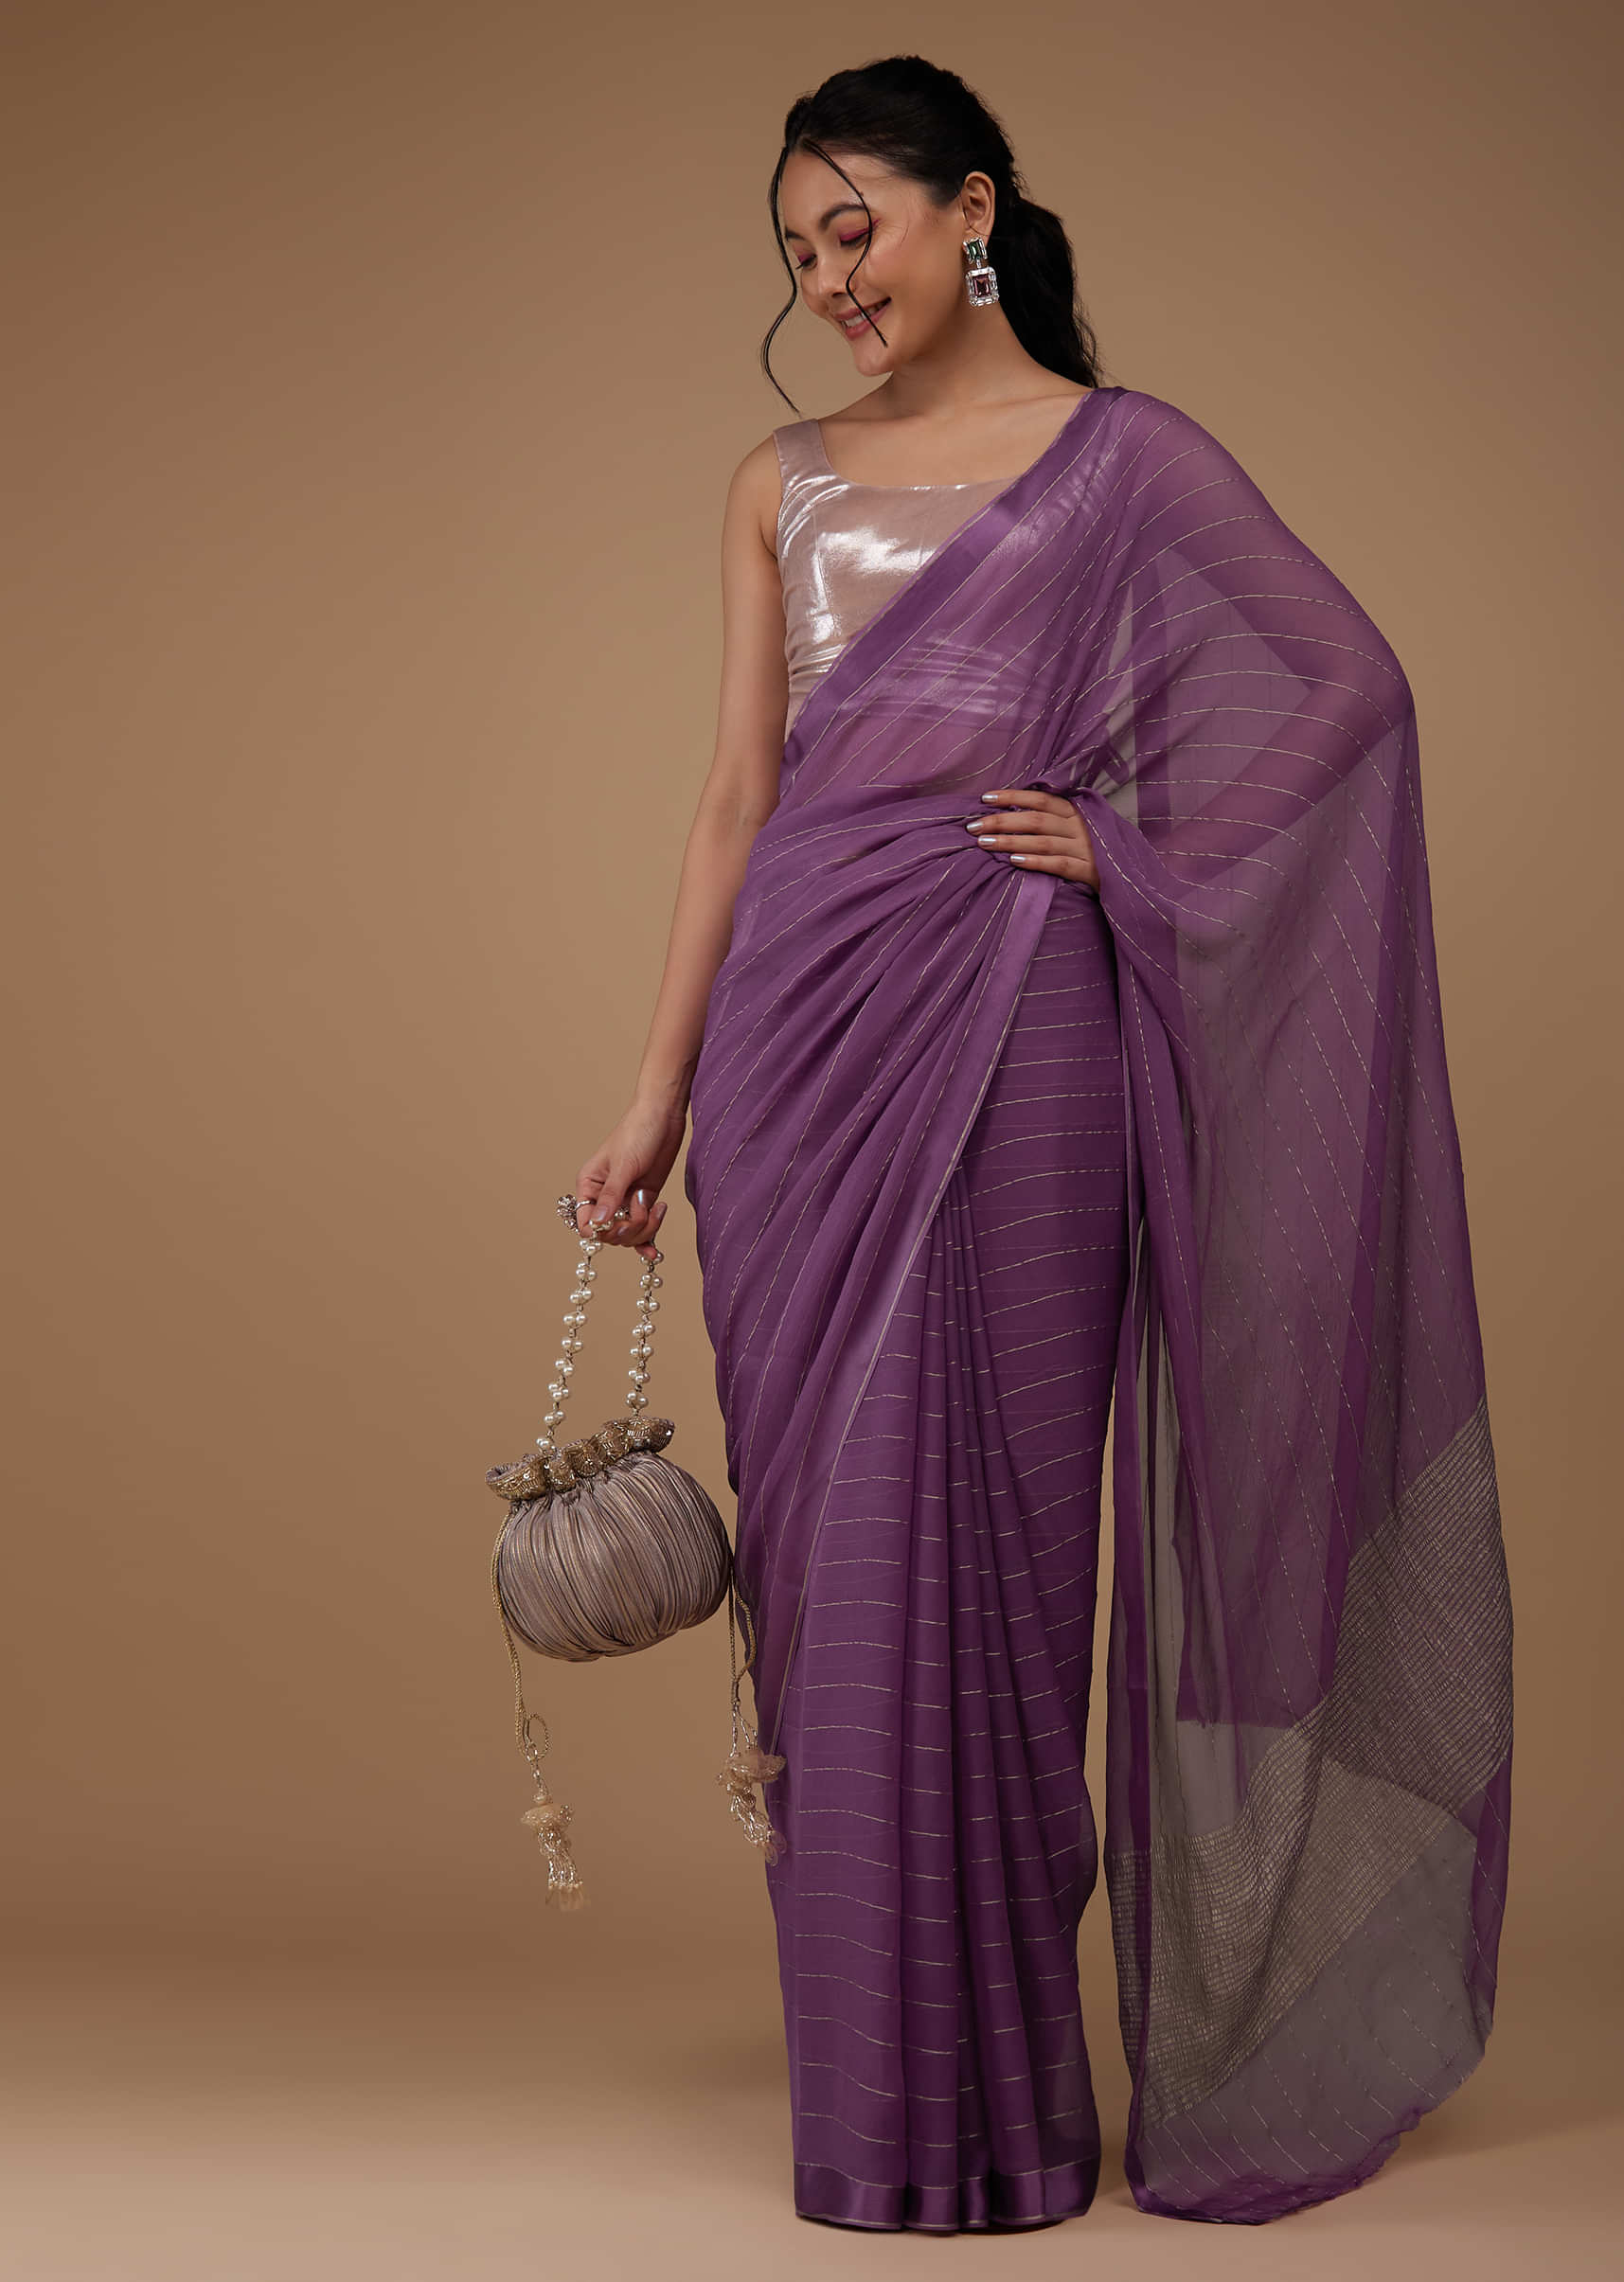 How to use old chiffon sarees in 8 fantastic ways  Fashionworldhub